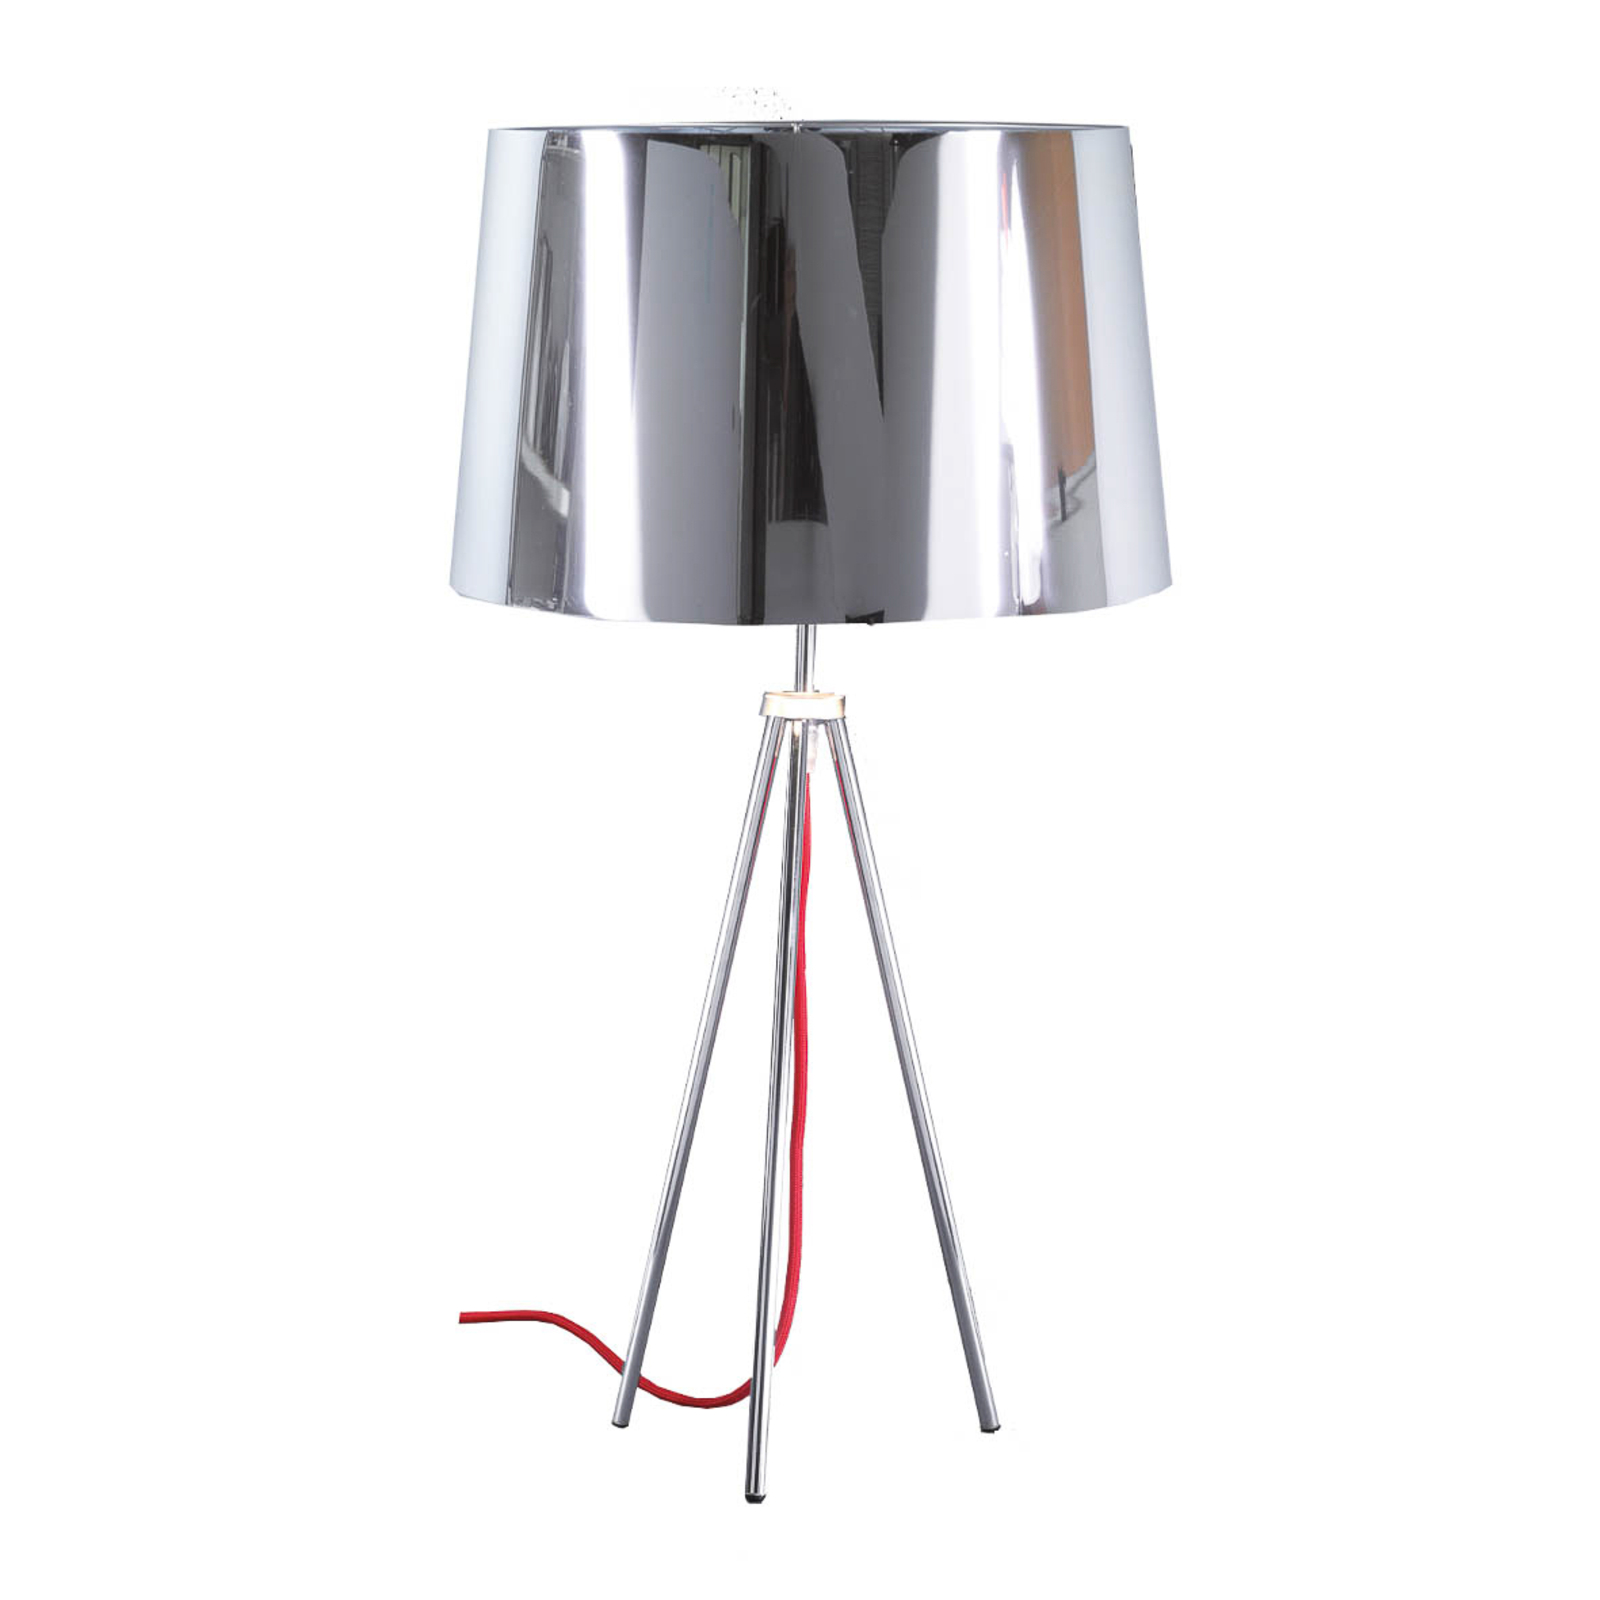 Aluminor Tropic lampe à poser chromée, câble rouge